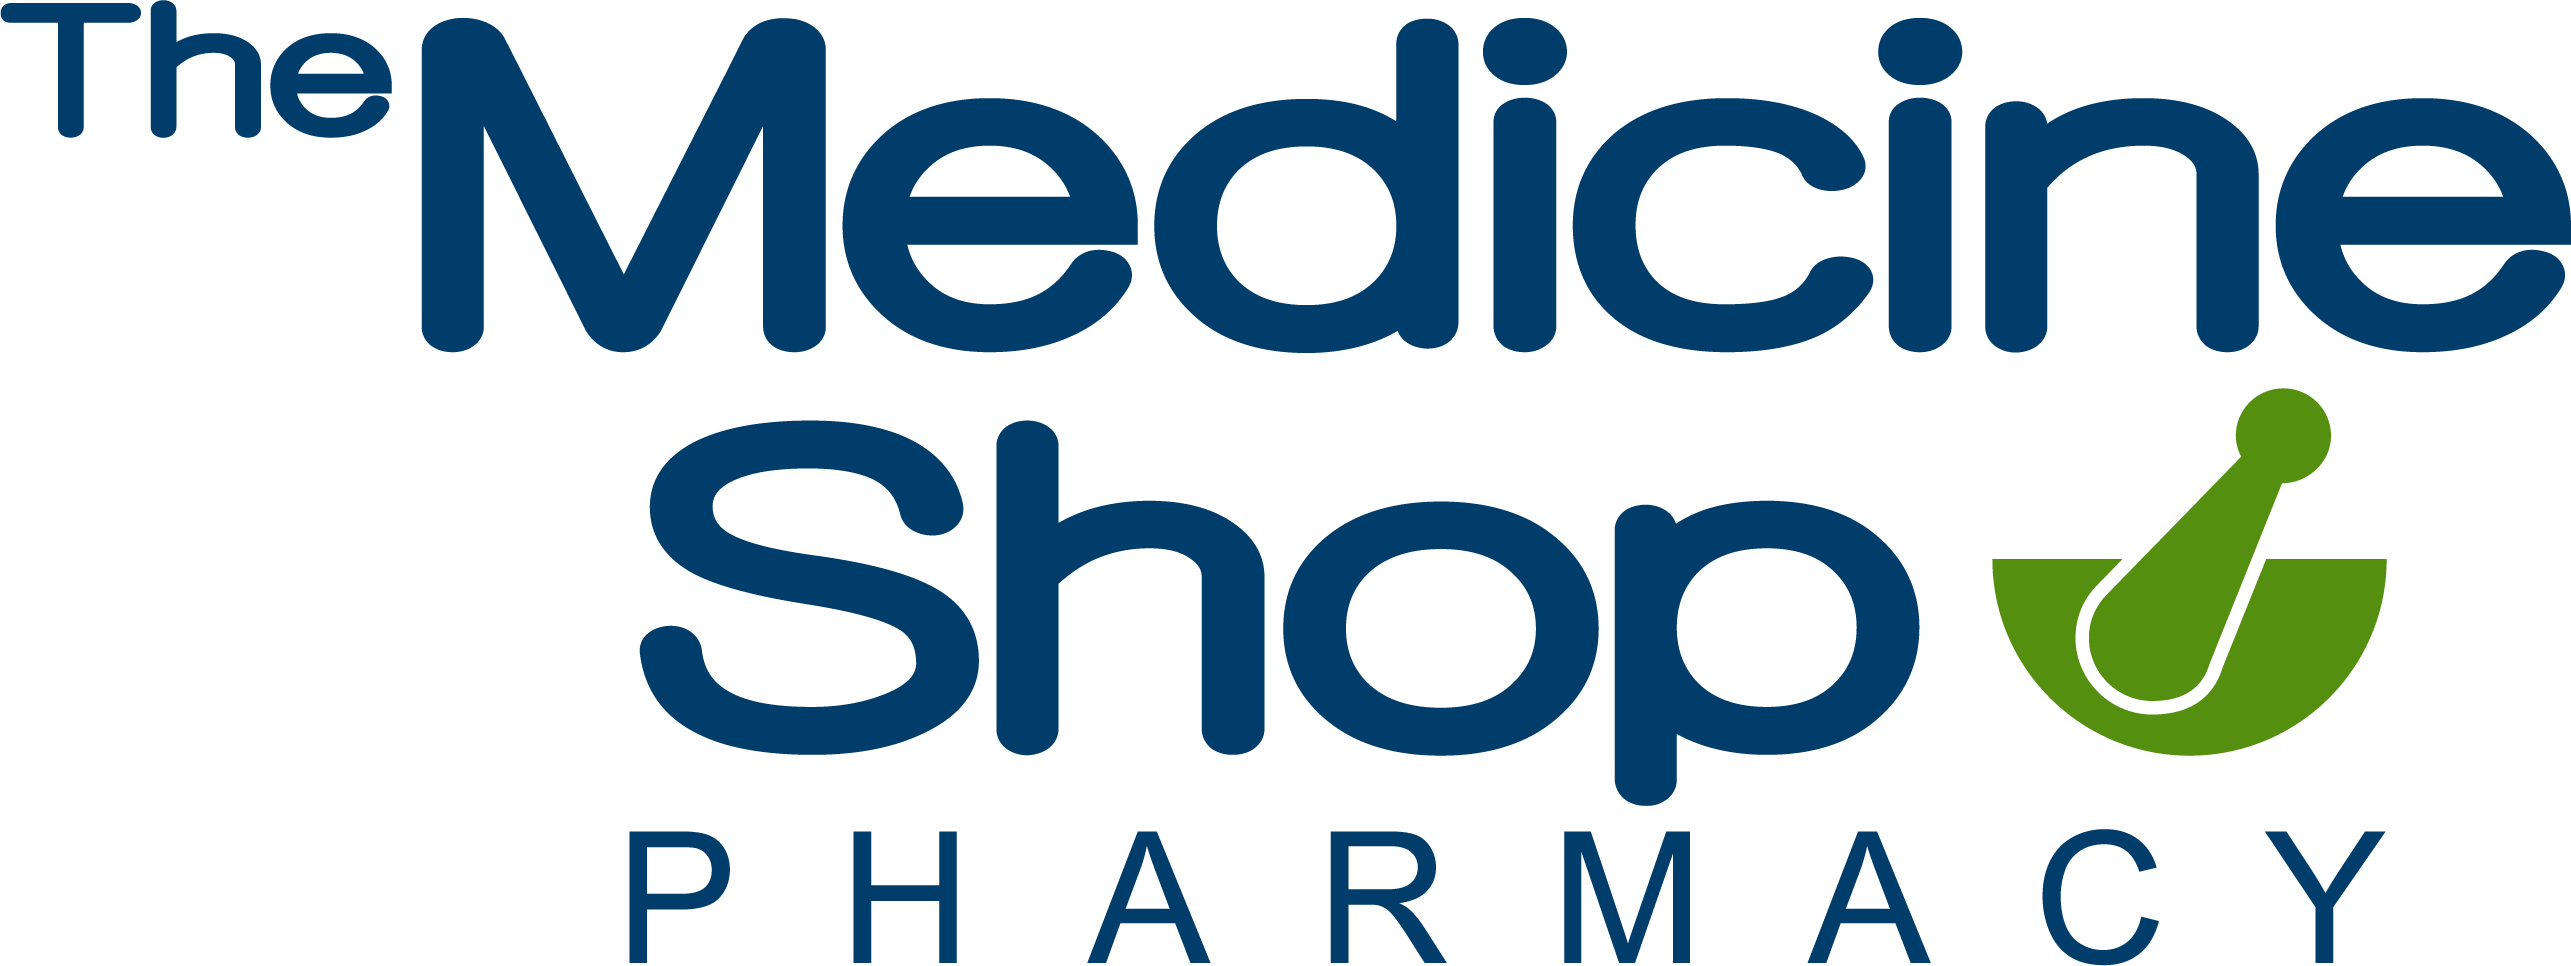 The Medicine Shop Pharmacy